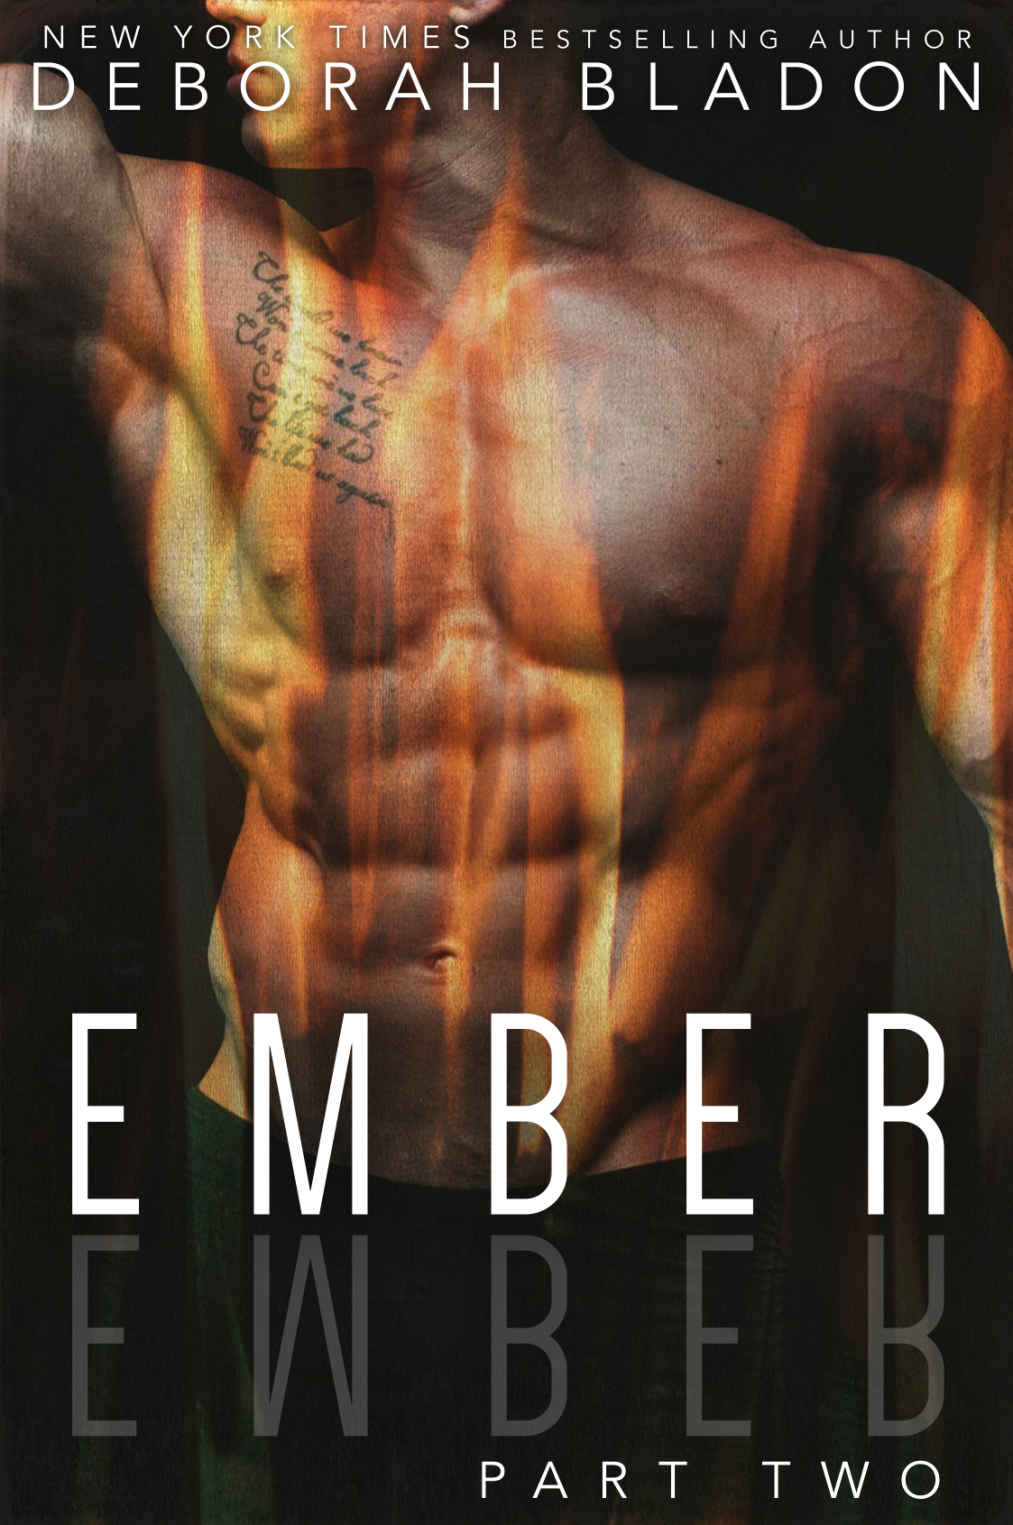 EMBER - Part Two (The EMBER Series Book 2) by Deborah Bladon